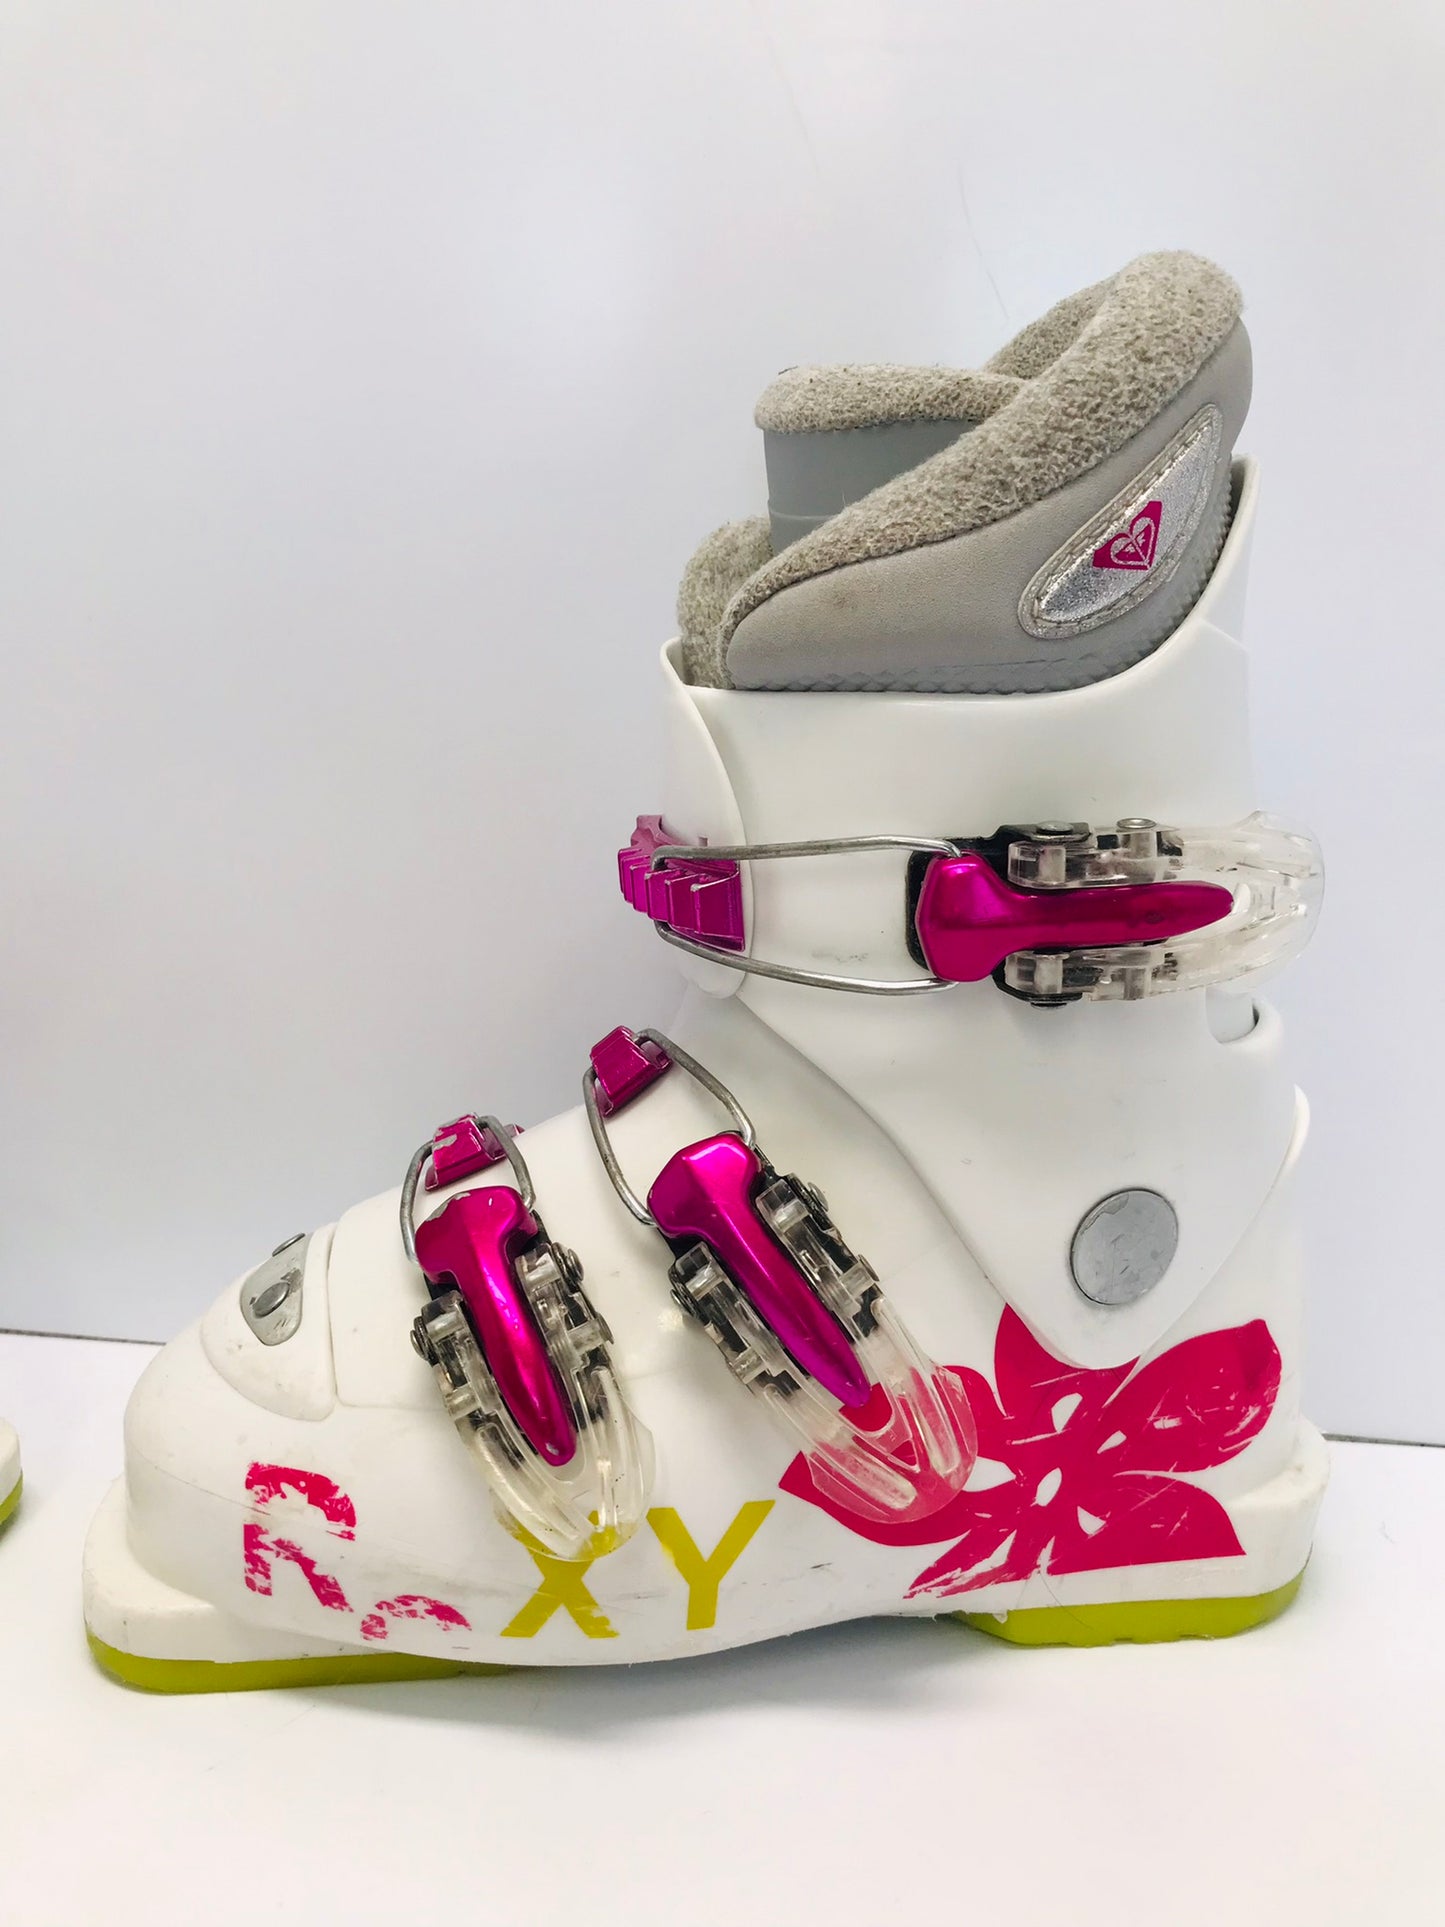 Ski Boots Mondo Size 19.0 Child Size 19.0 237 mm Roxy White Pink Yellow minor Scratches